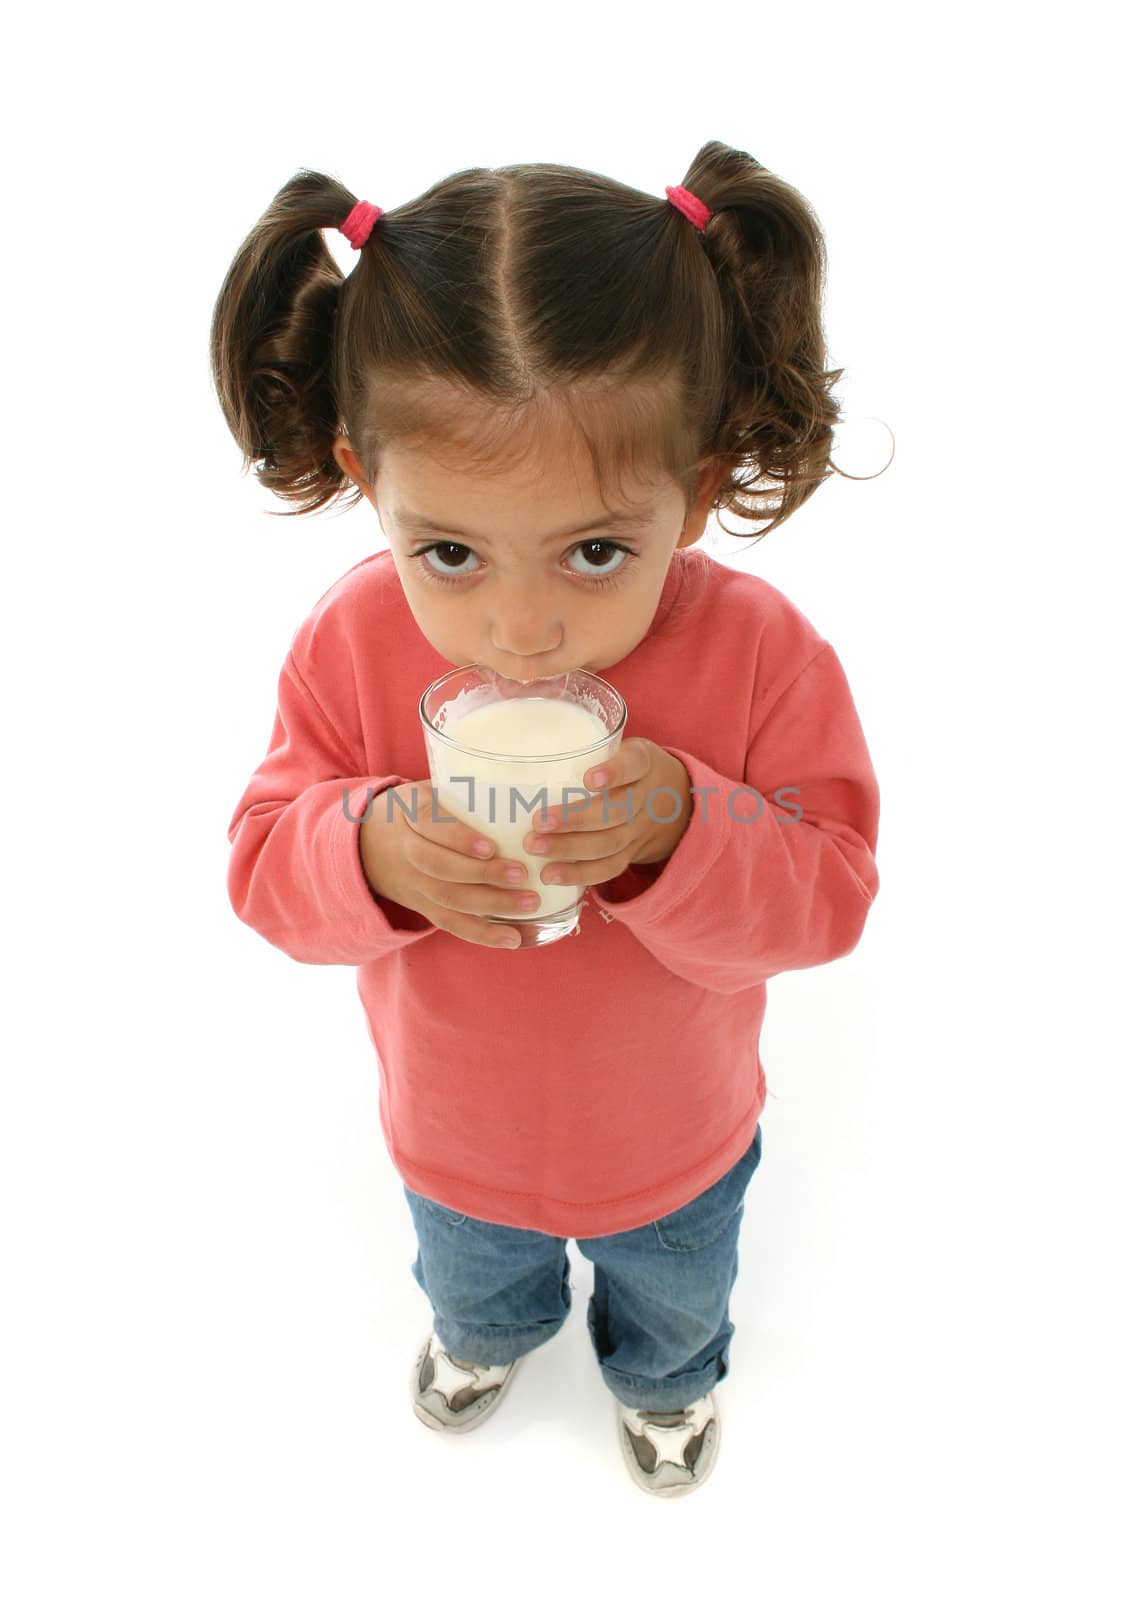 Toddler enjoying a glass of fresh milk